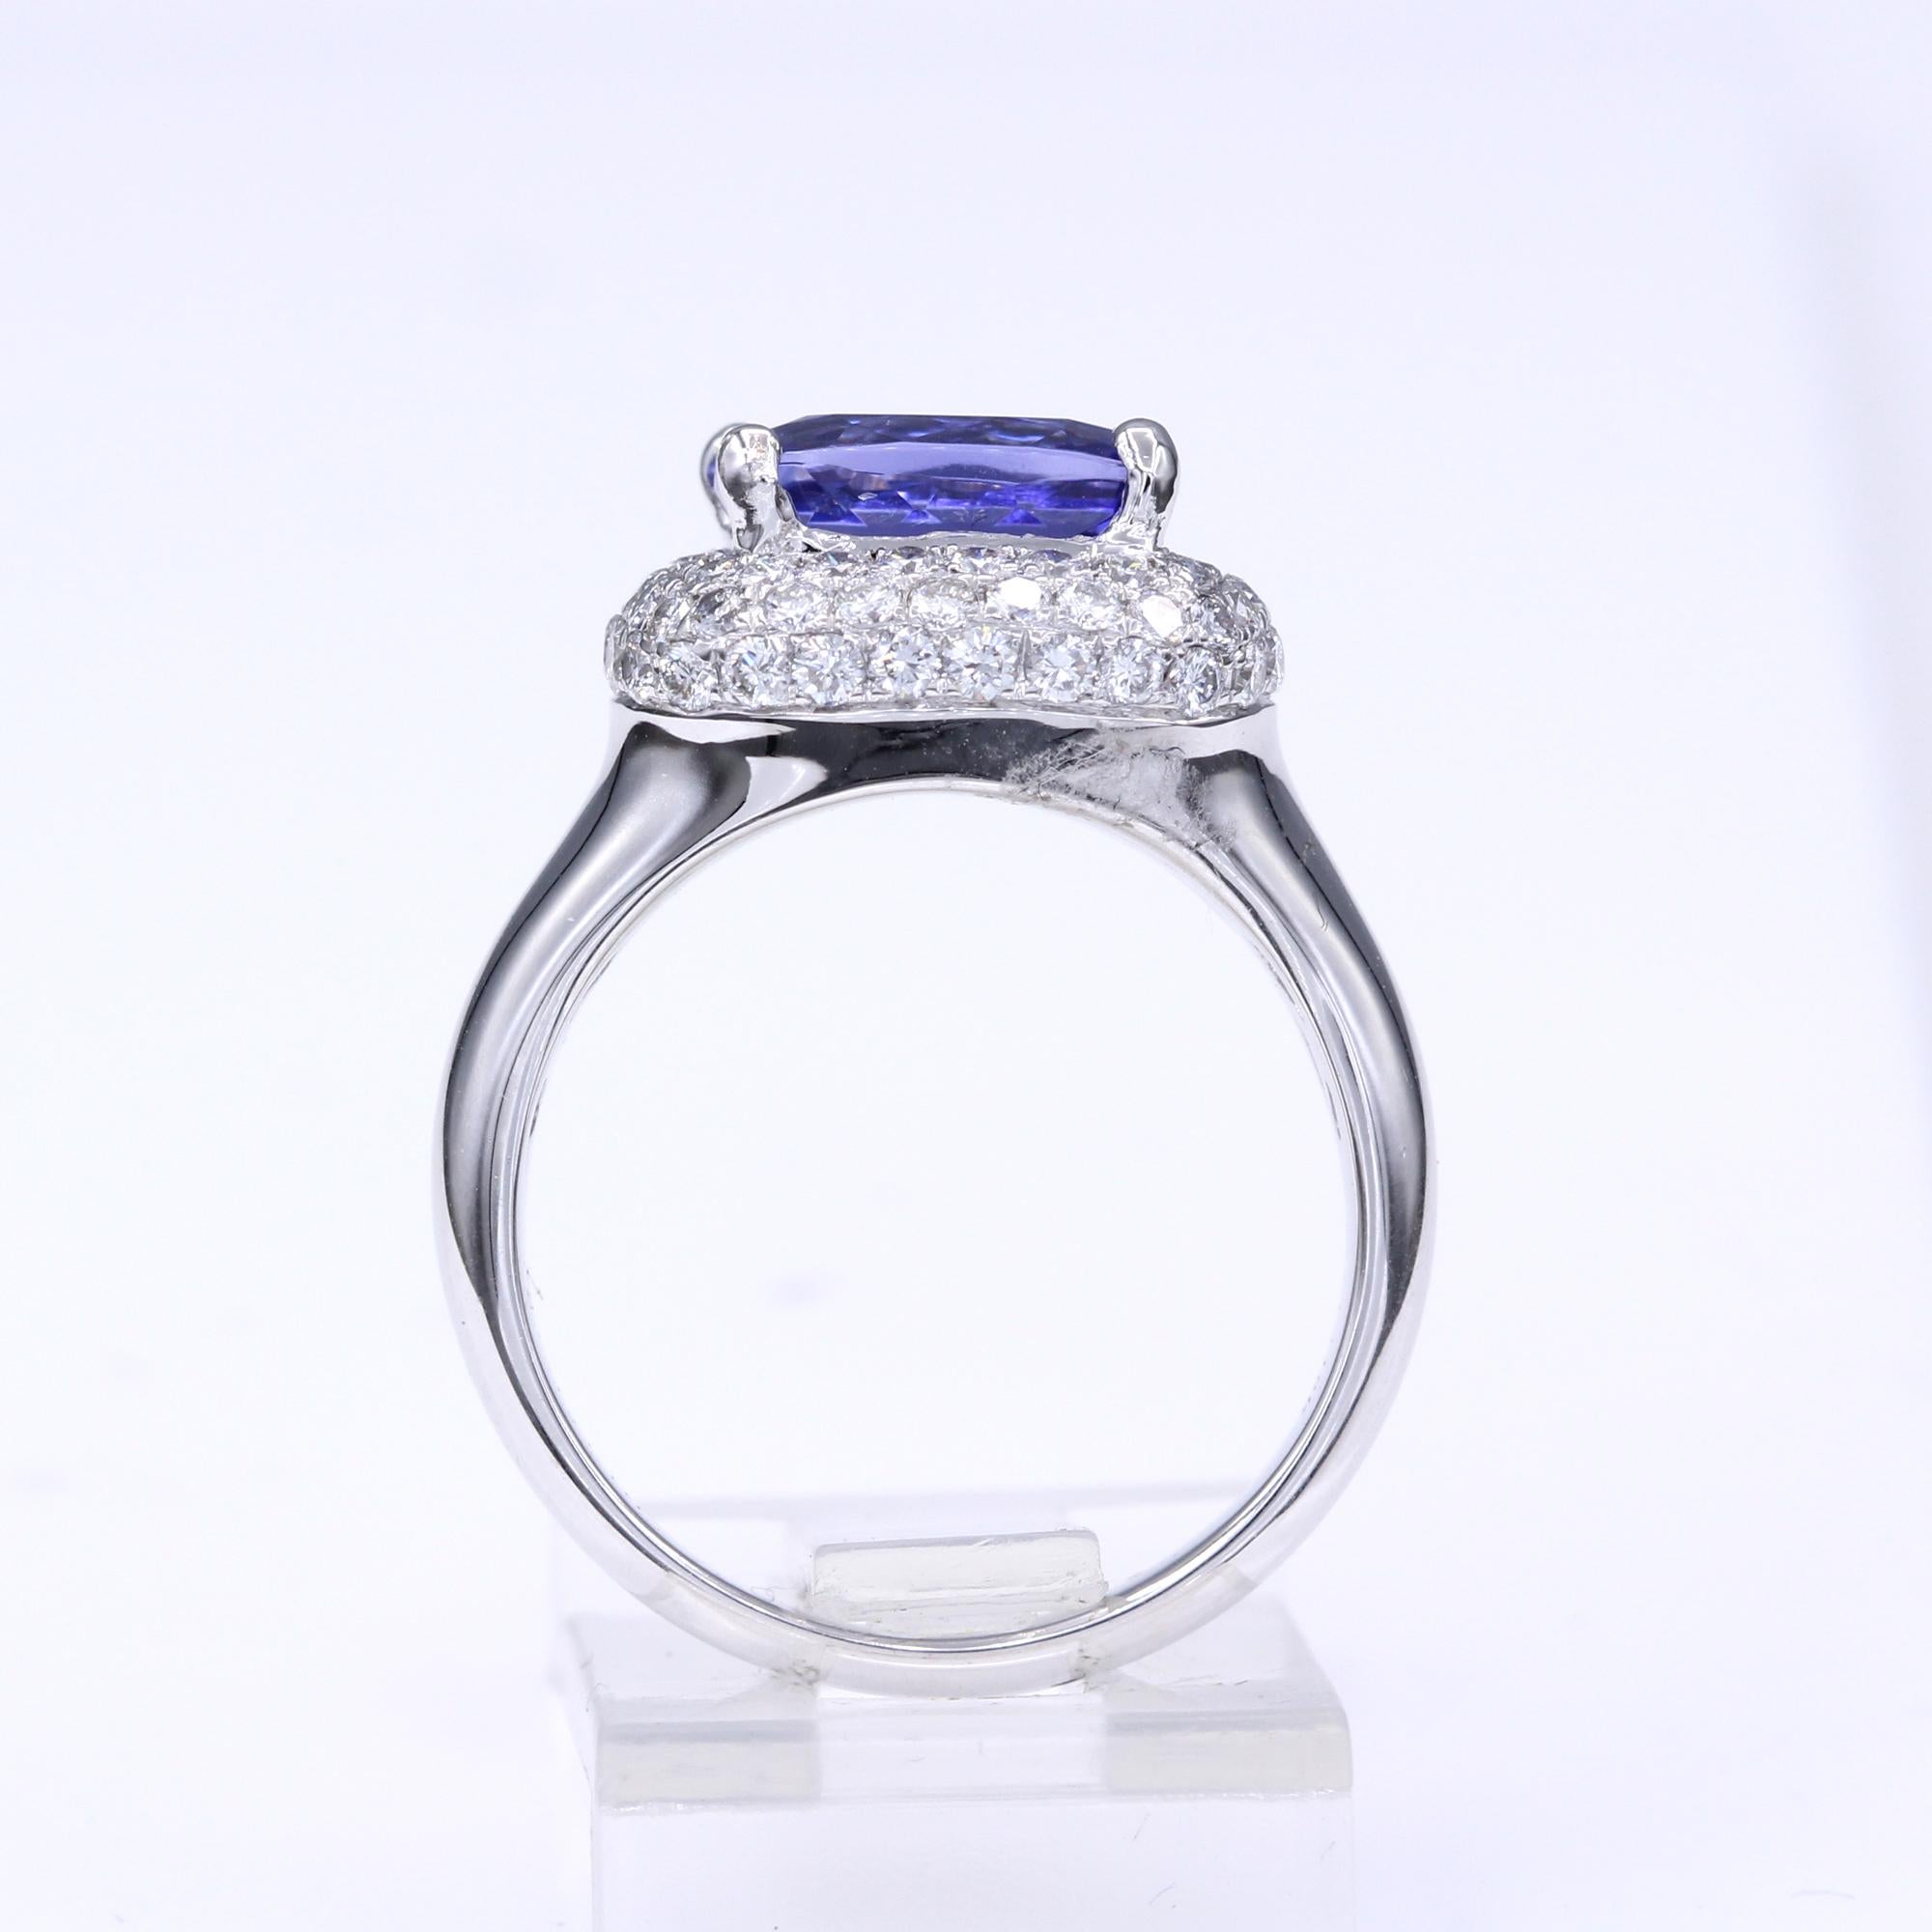 Fancy Tanzanite Ring & Diamonds, Modified Cushion shape Tanzanite AAA brilliant deep purple 3.64 carat 9 x 7 mm.
Total all Diamonds 1.12 carat GH-SI, 18k White Gold 3.65 Grams, Finger Size 7.